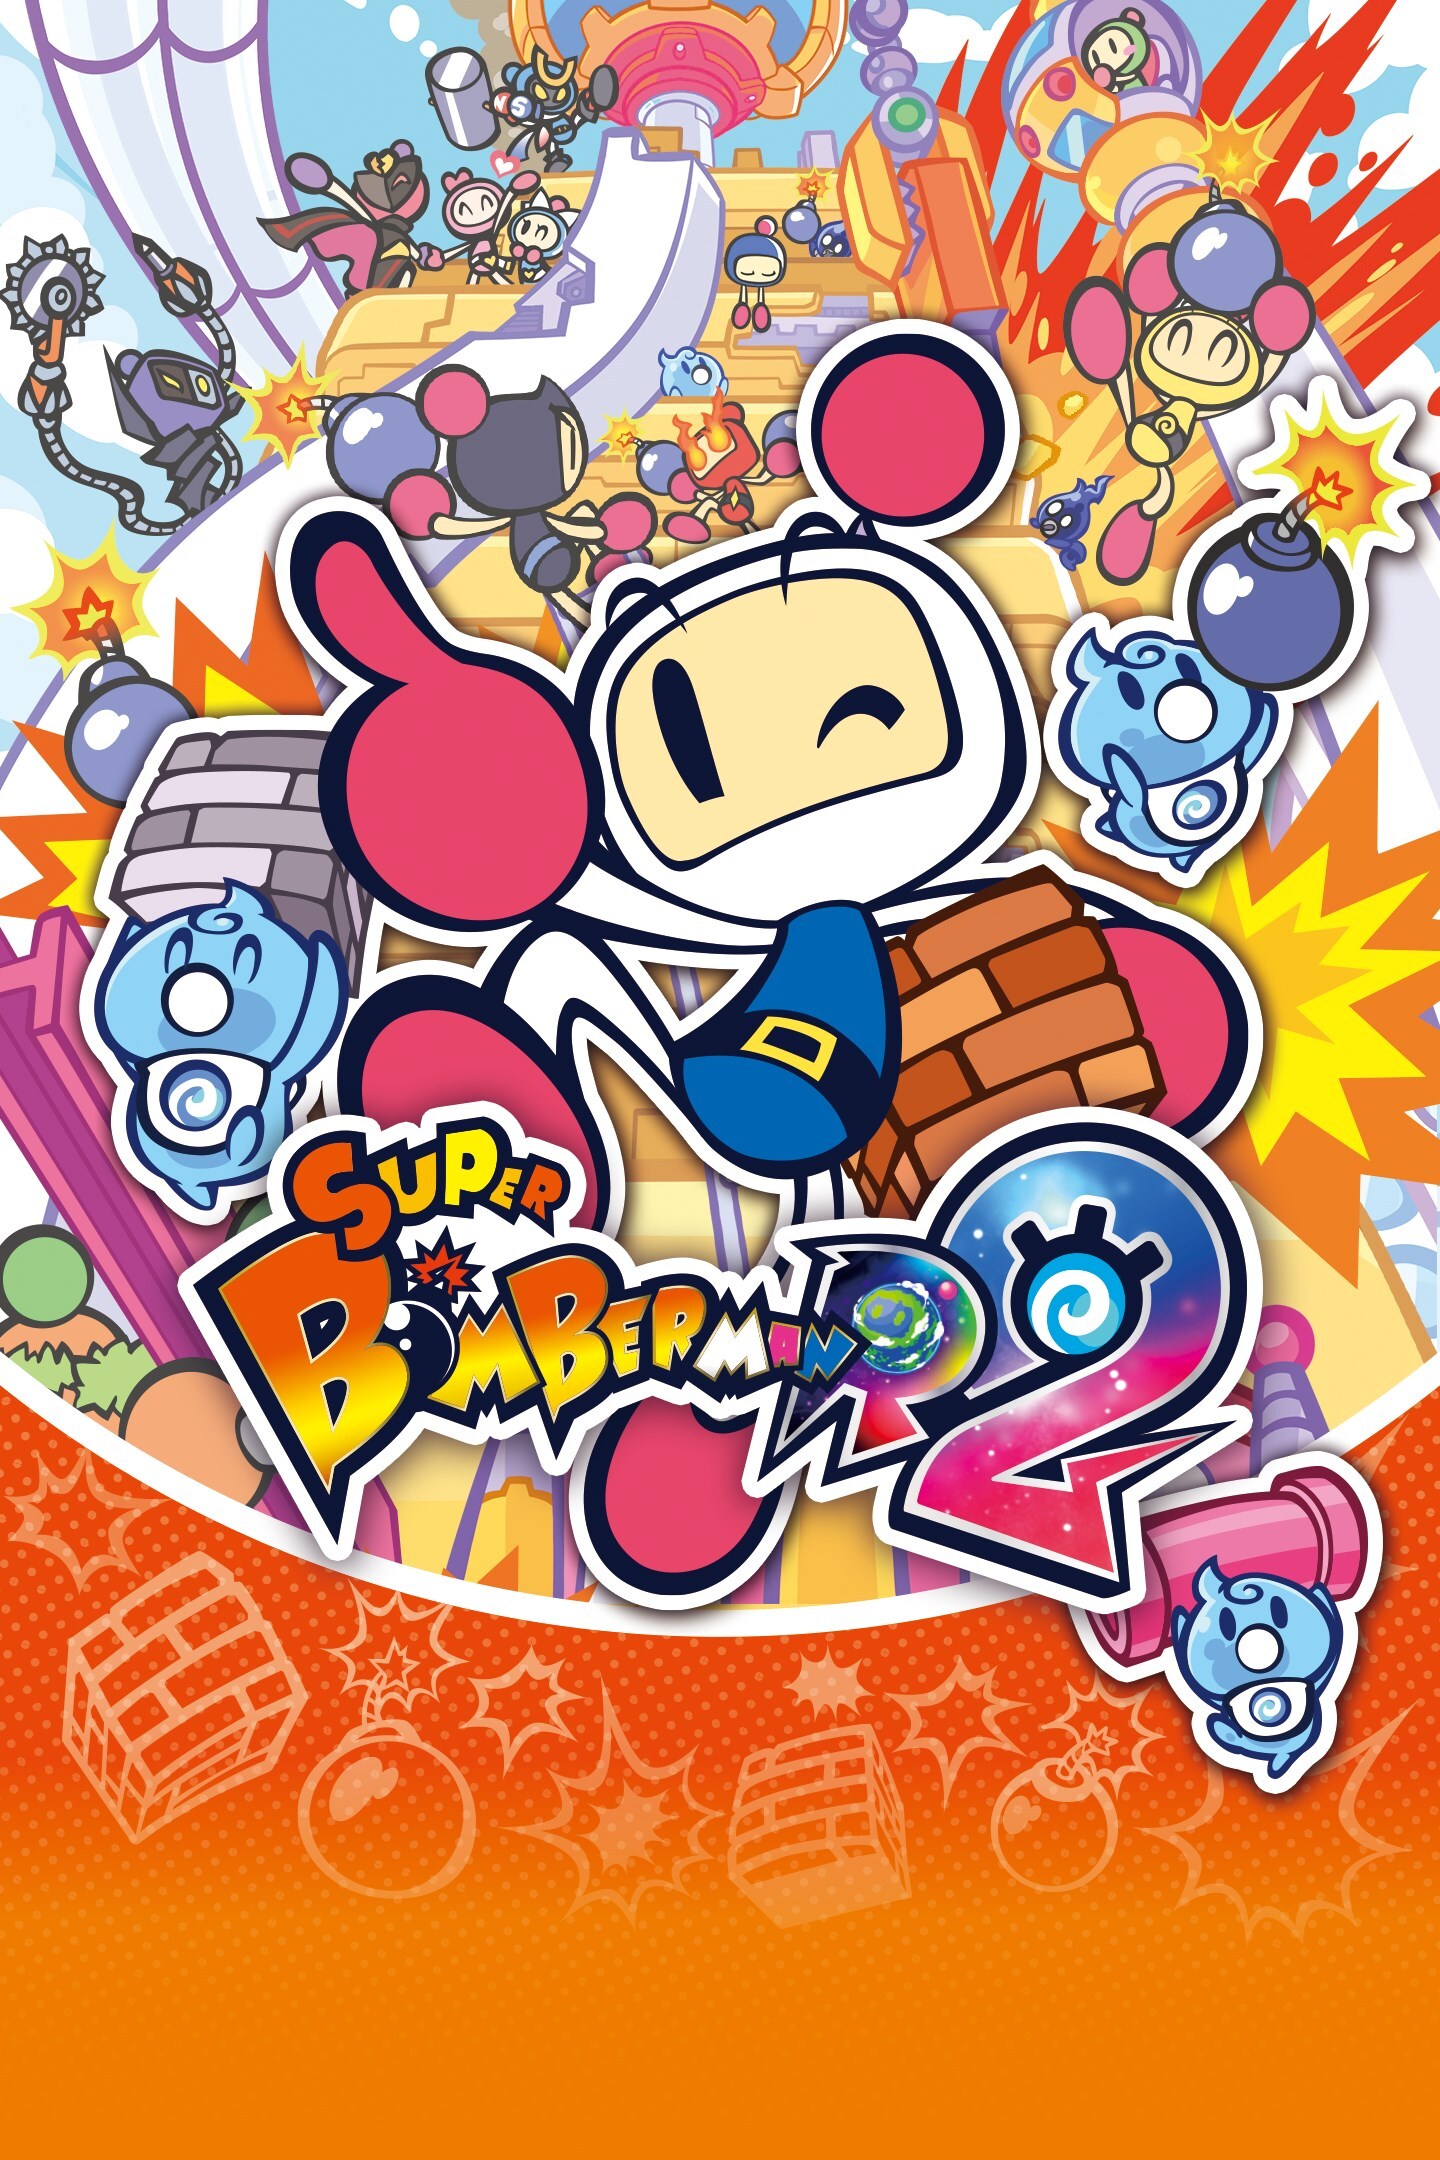 Super Bomberman R - Nintendo Switch | Nintendo Switch | GameStop